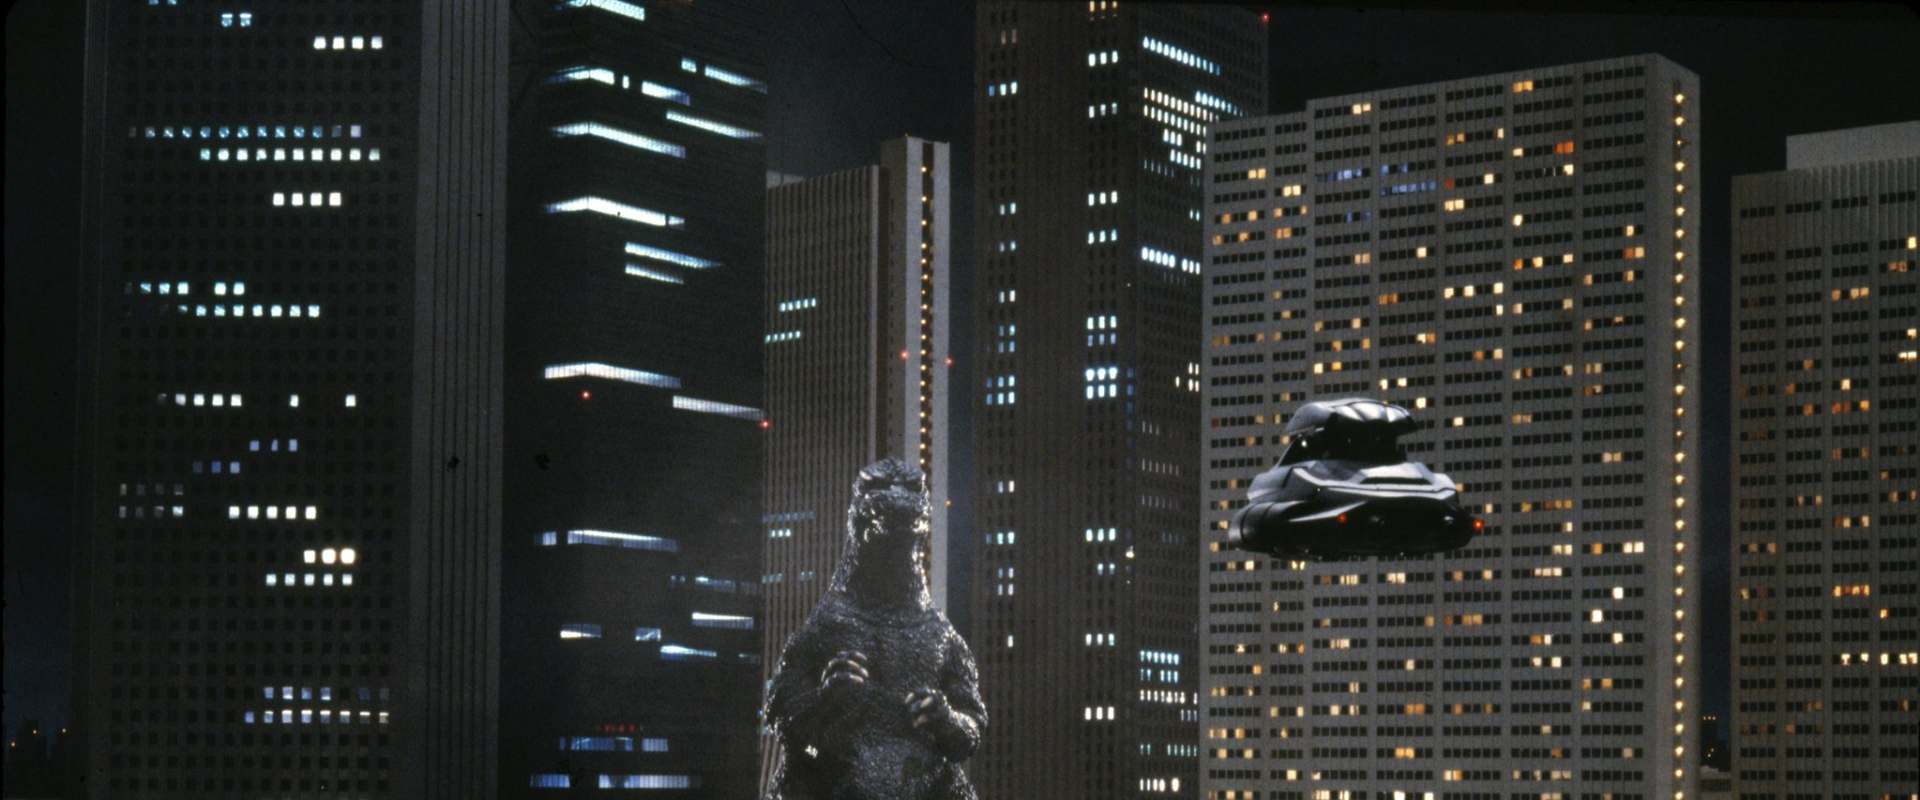 The Return of Godzilla background 1